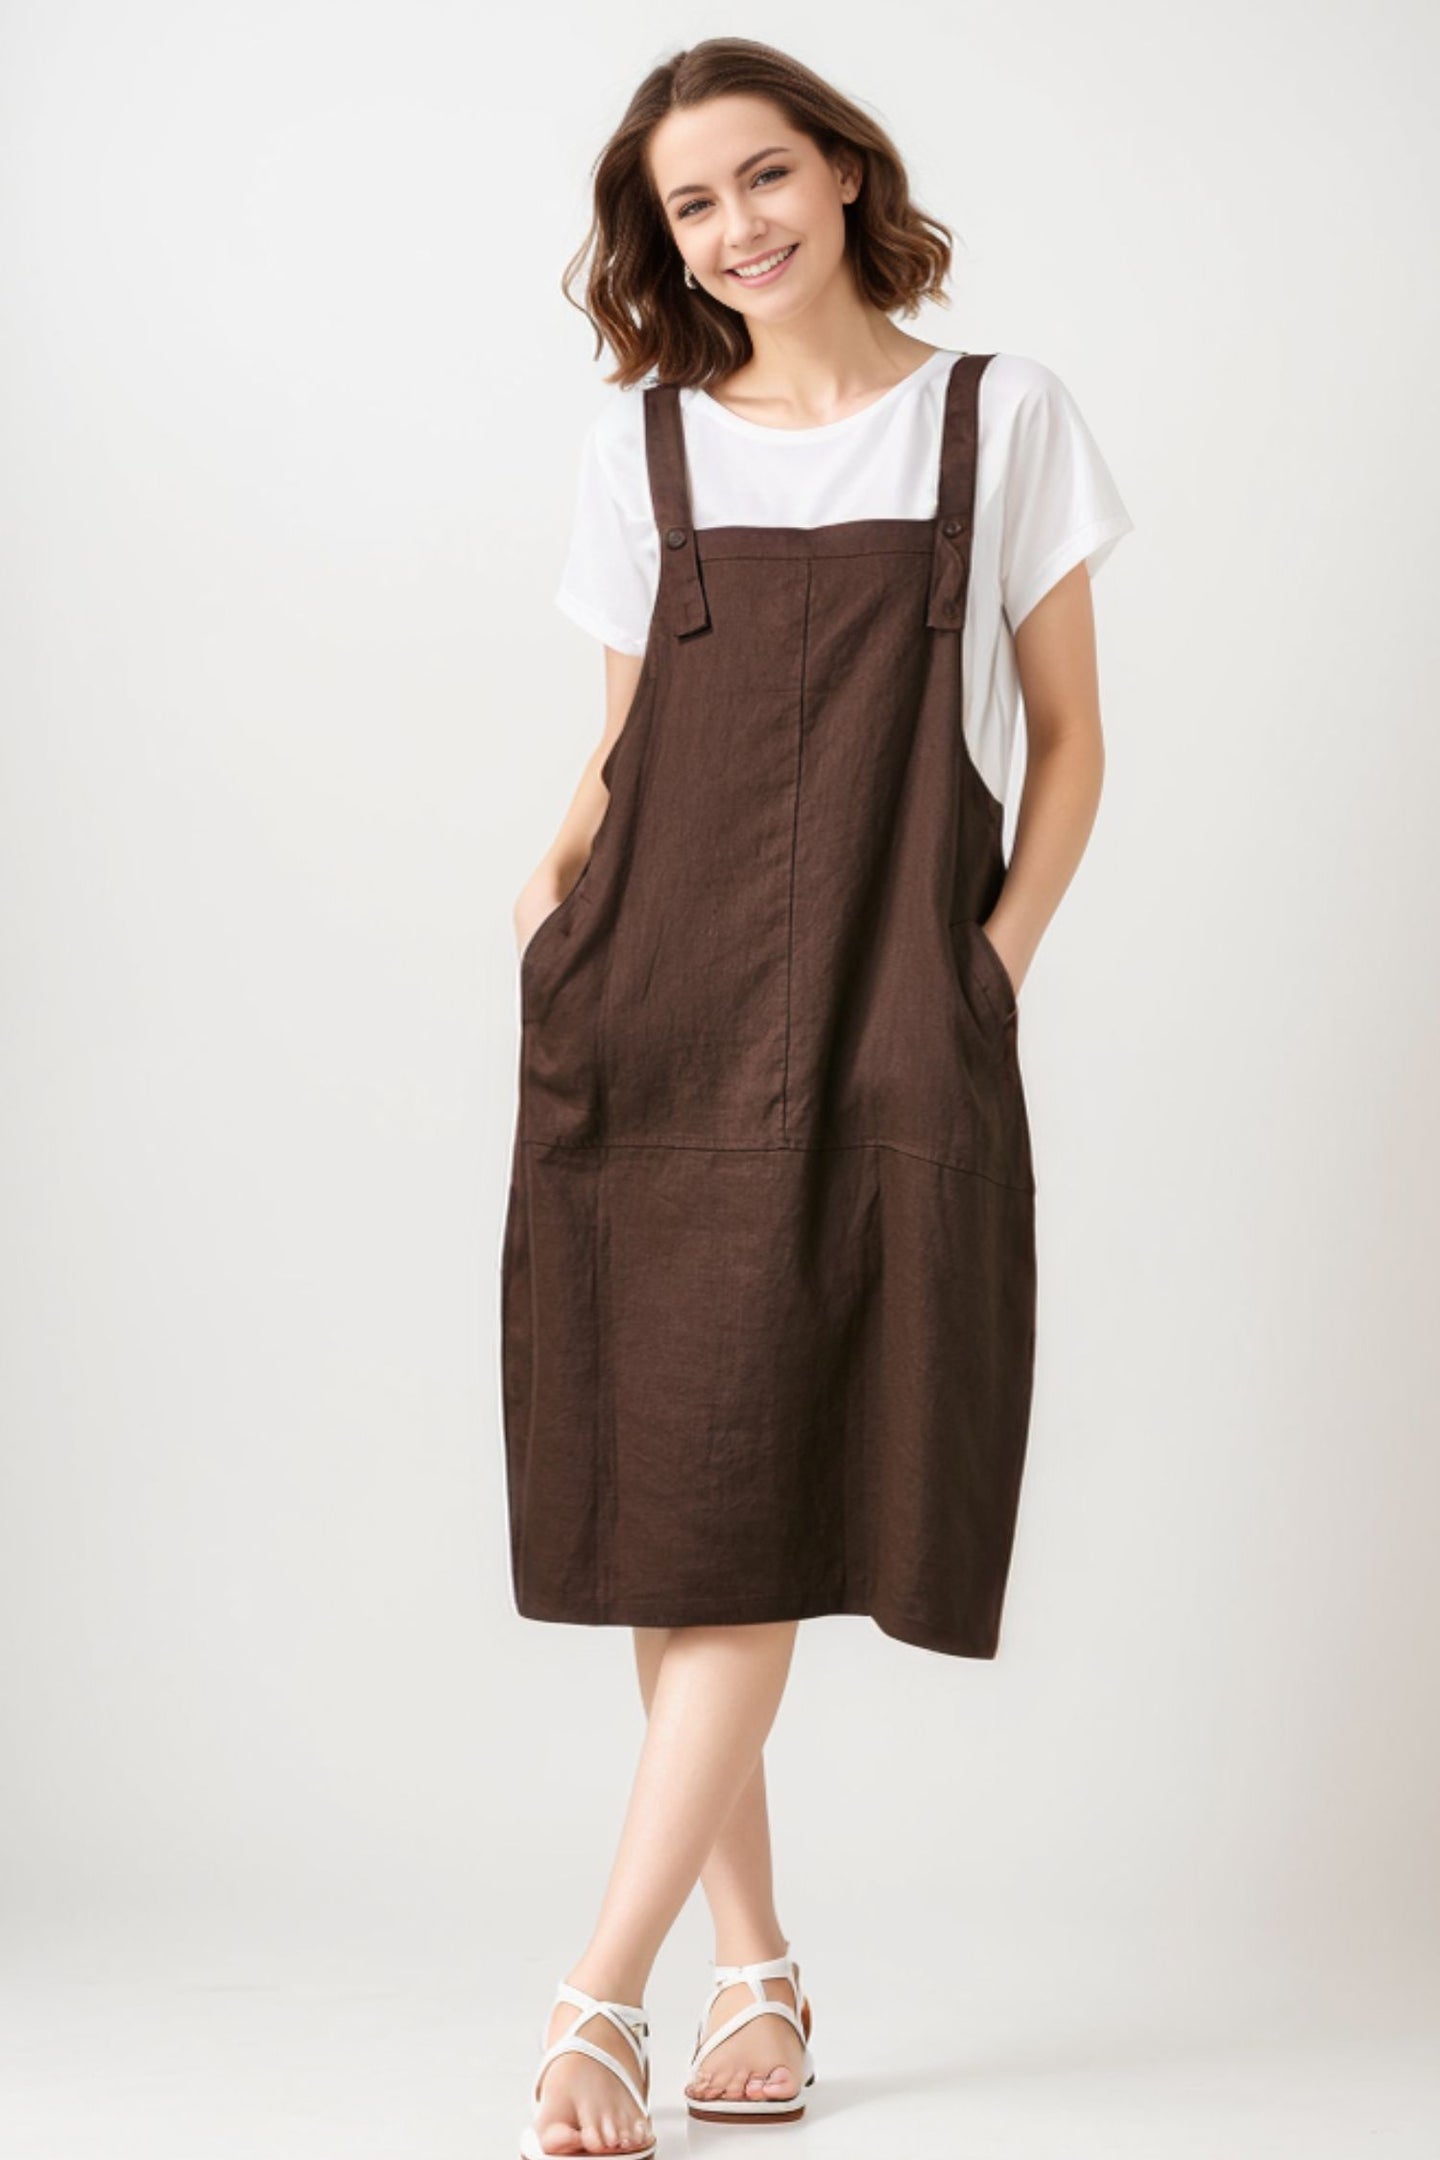 Women Casual Linen Vest Dress Strap Dress  C1700